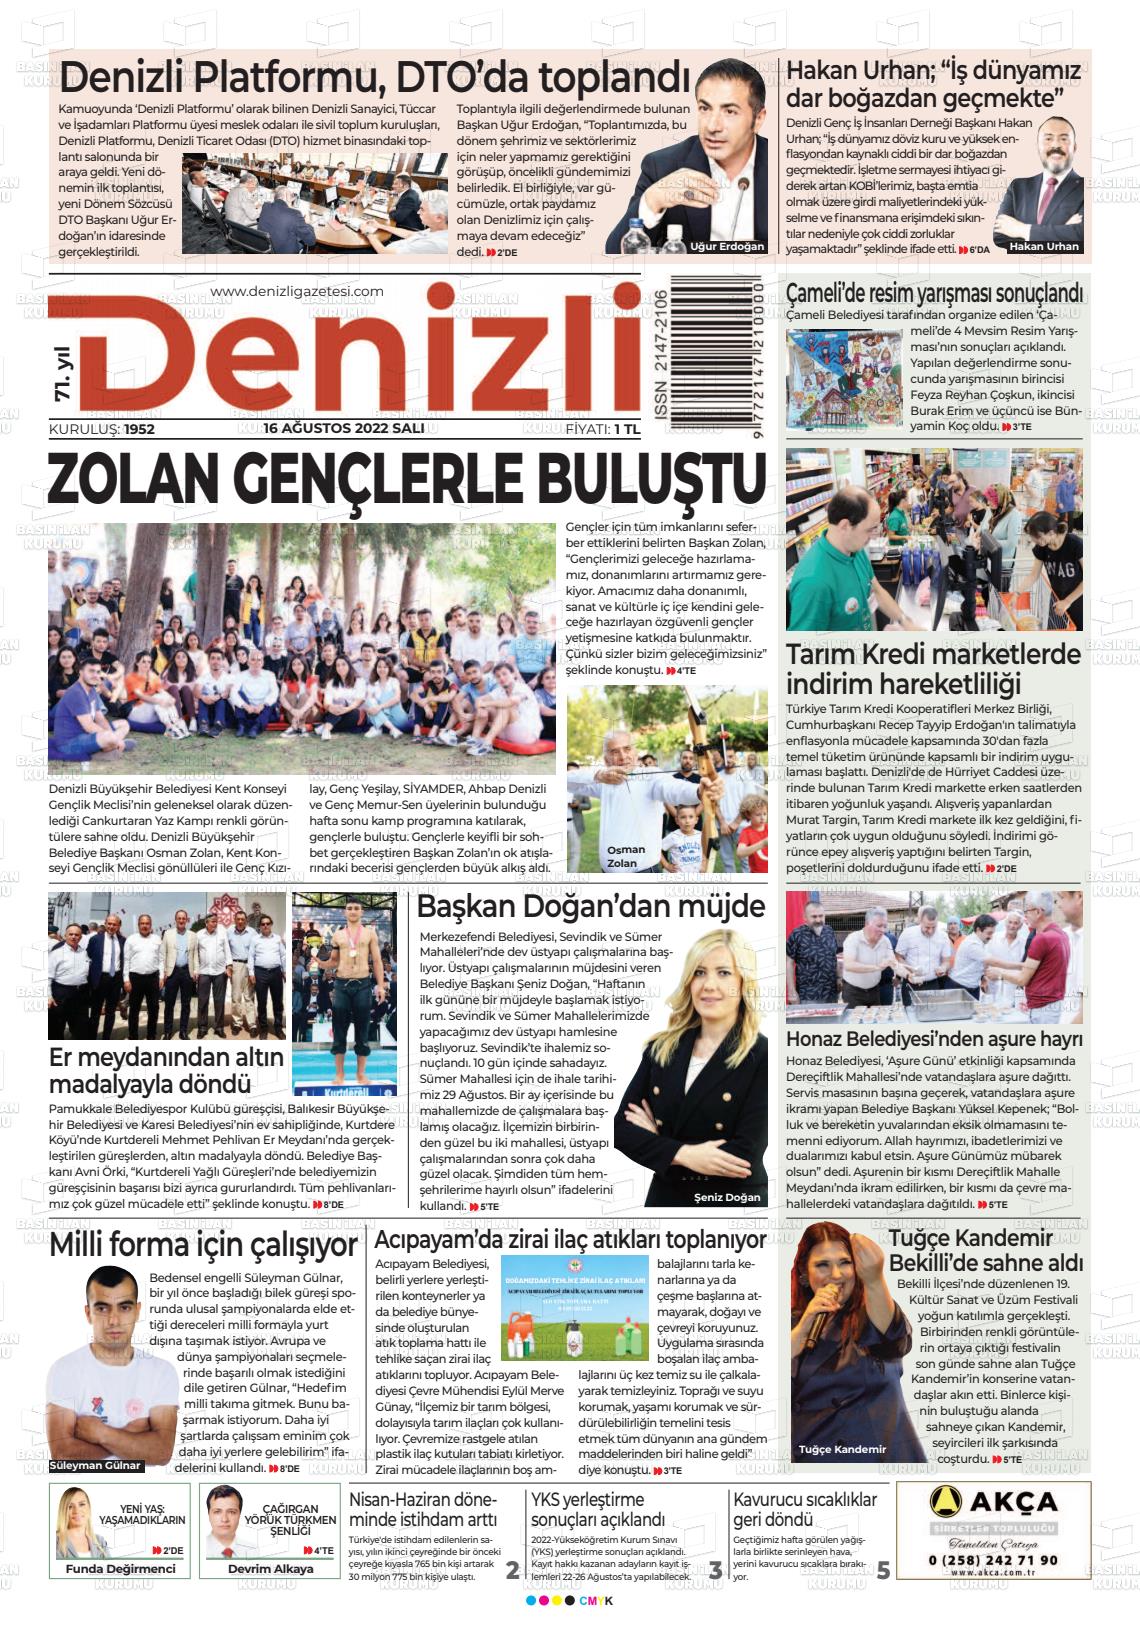 16 Ağustos 2022 Denizli Gazete Manşeti